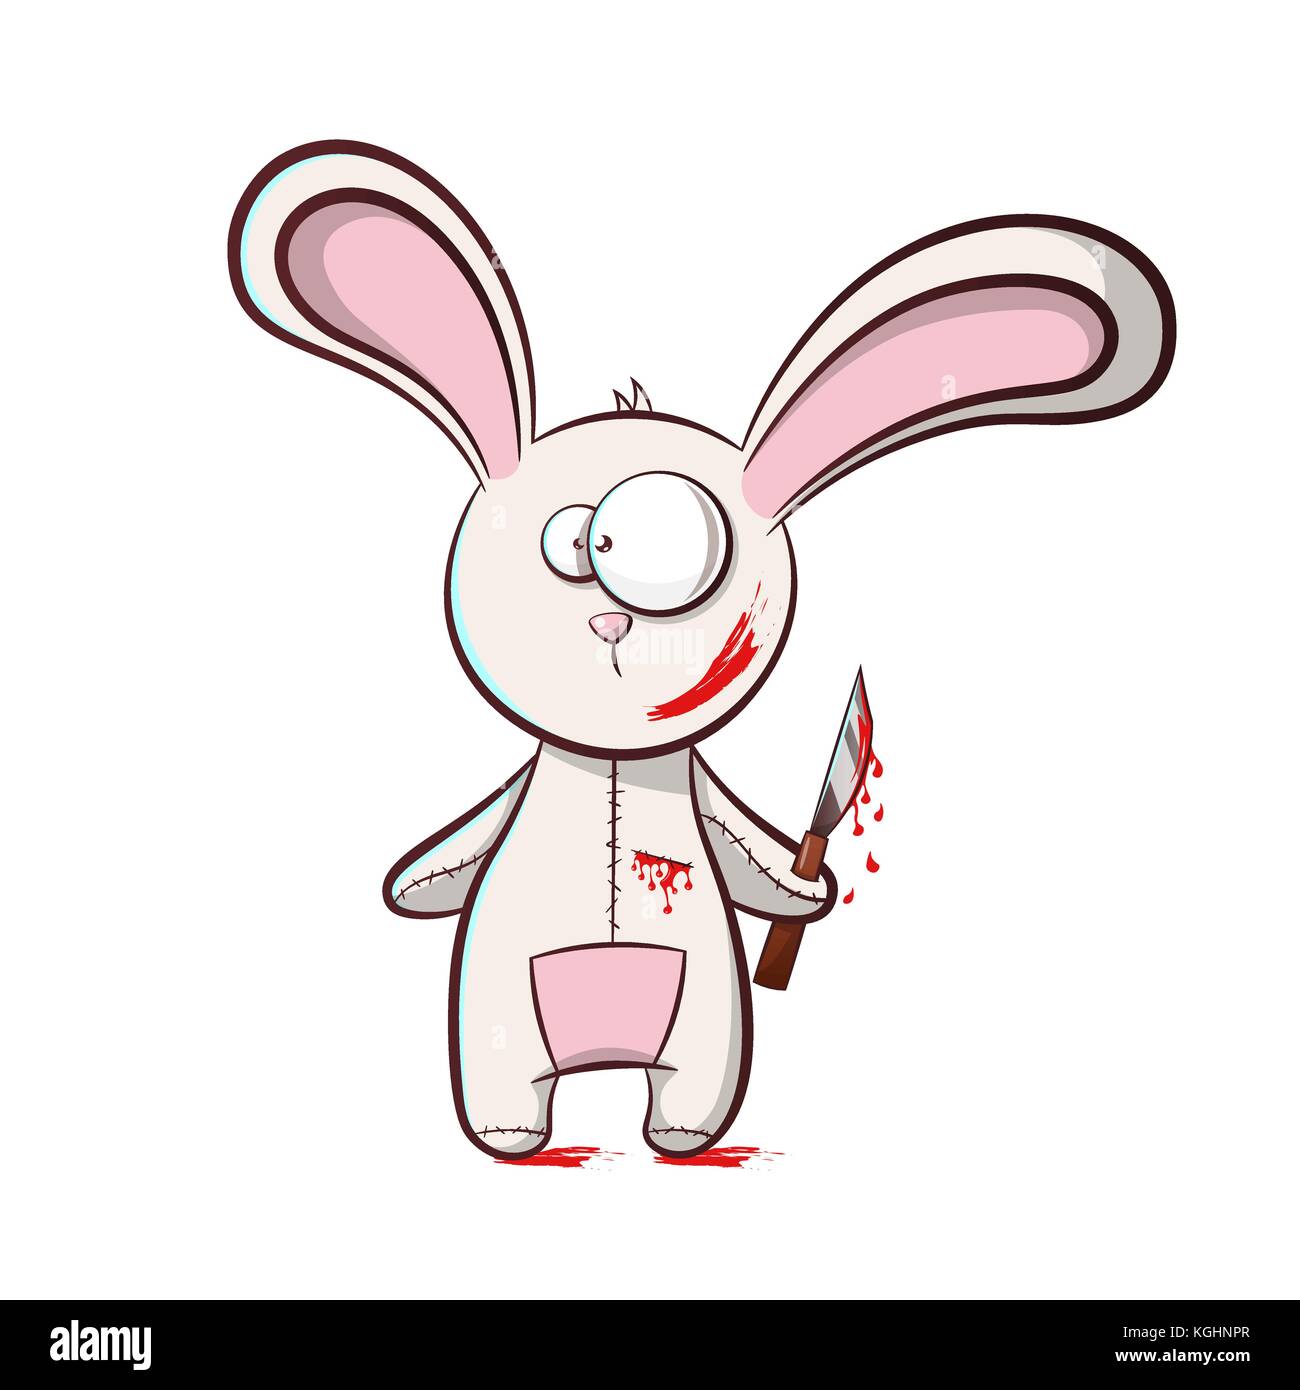 Halloween Stitch Bunny Rabbit Zombie Voodoo Doll Stock Illustration -  Download Image Now - Rabbit - Animal, Evil, Doll - iStock